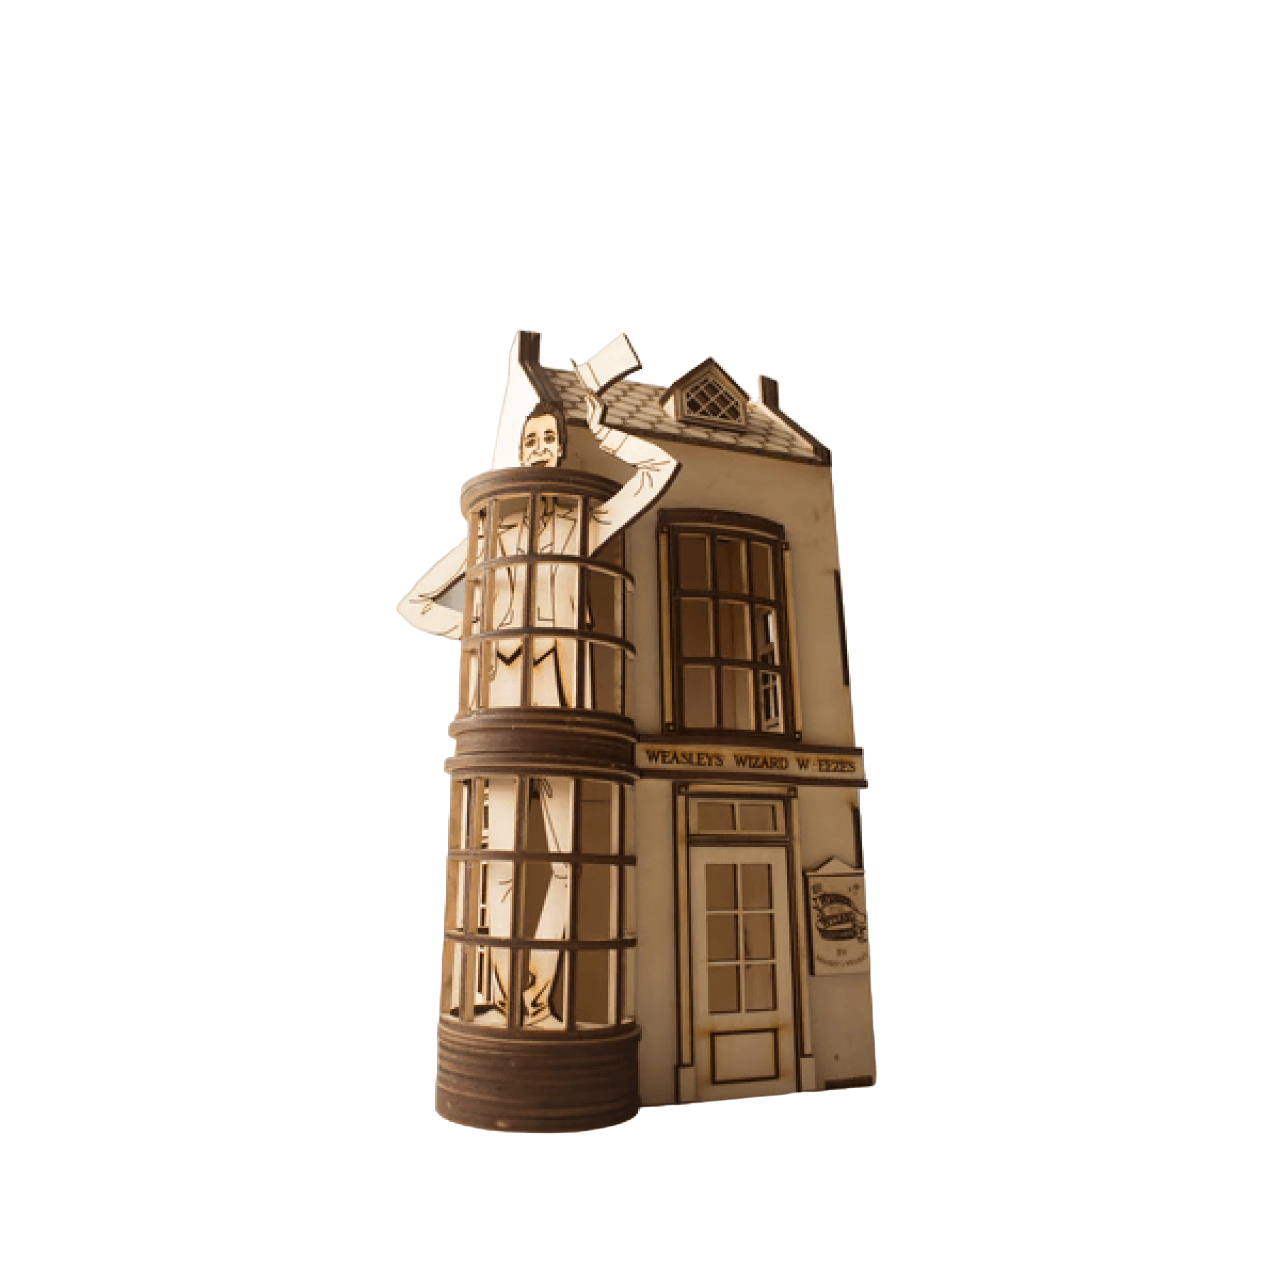 DIY Dollhouse Kit Wooden Miniature Diagon Alley Shops Weasleys' Wizard Wheezes Miniature Magical World Miniatures - Rajbharti Crafts